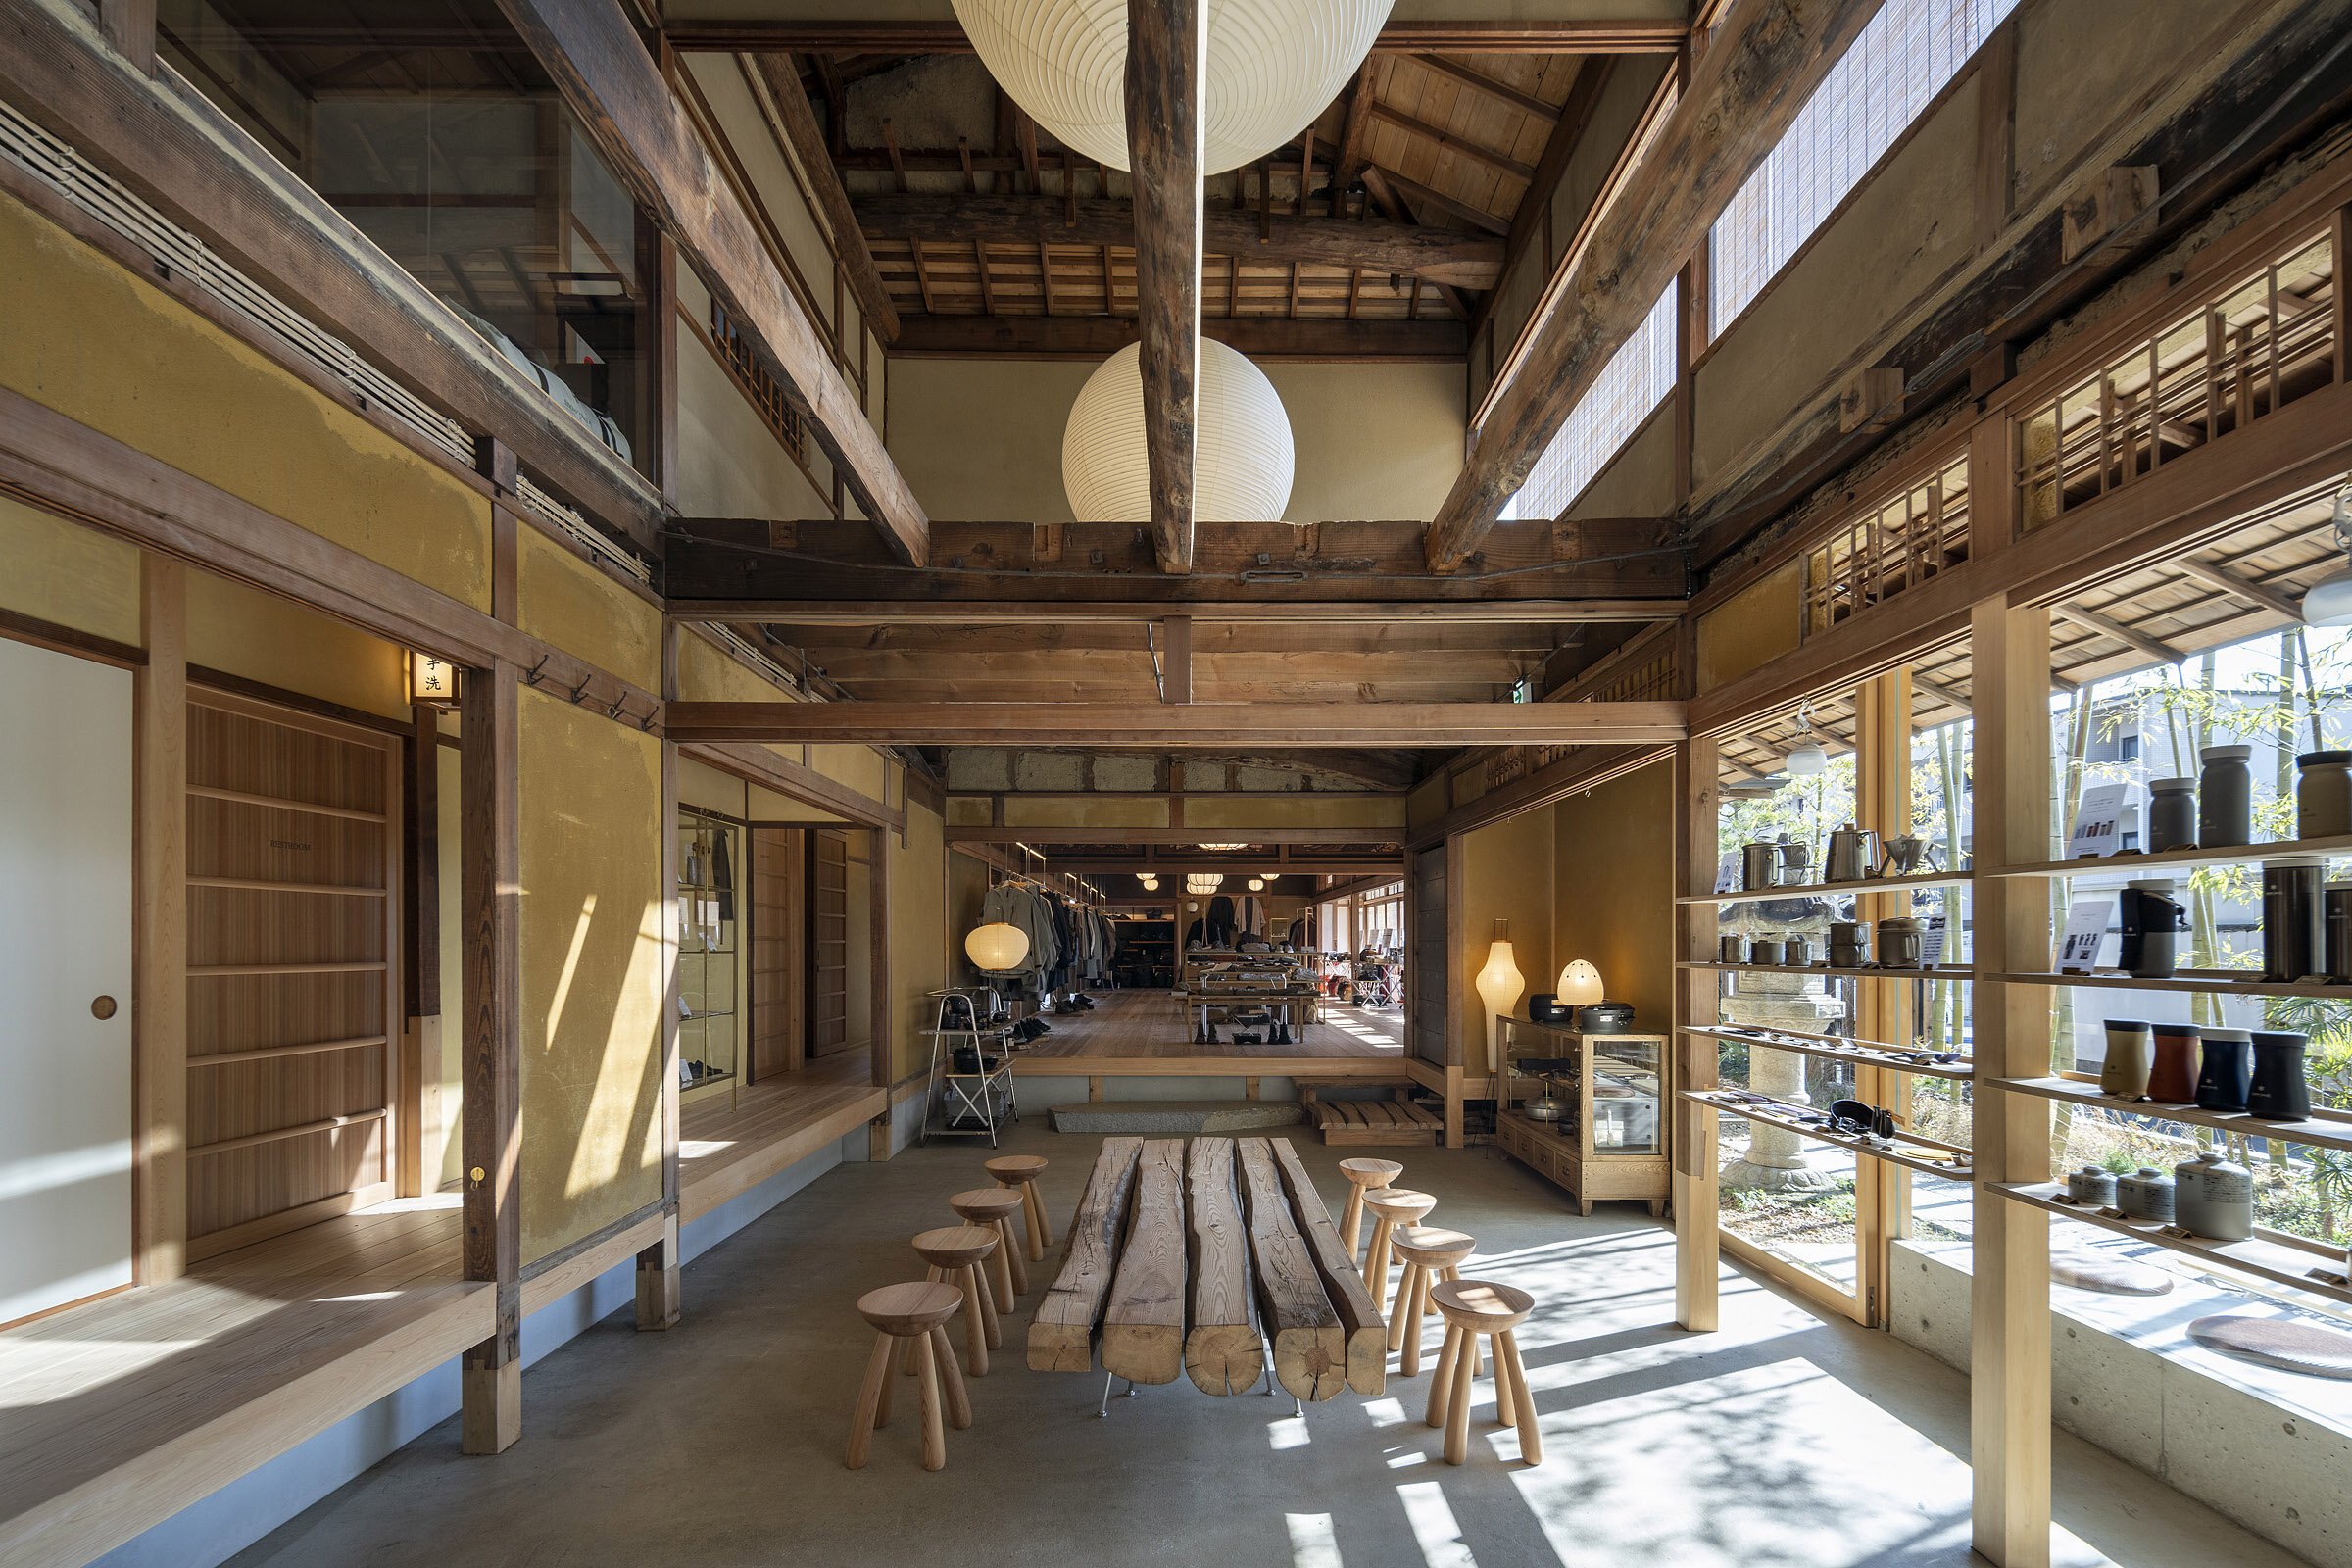  cafe co.の森井良幸がデザインしたスノーピークランドステーション京都嵐山のカフェ客席。スツールは木工作家、森幸太郎によるもの。 